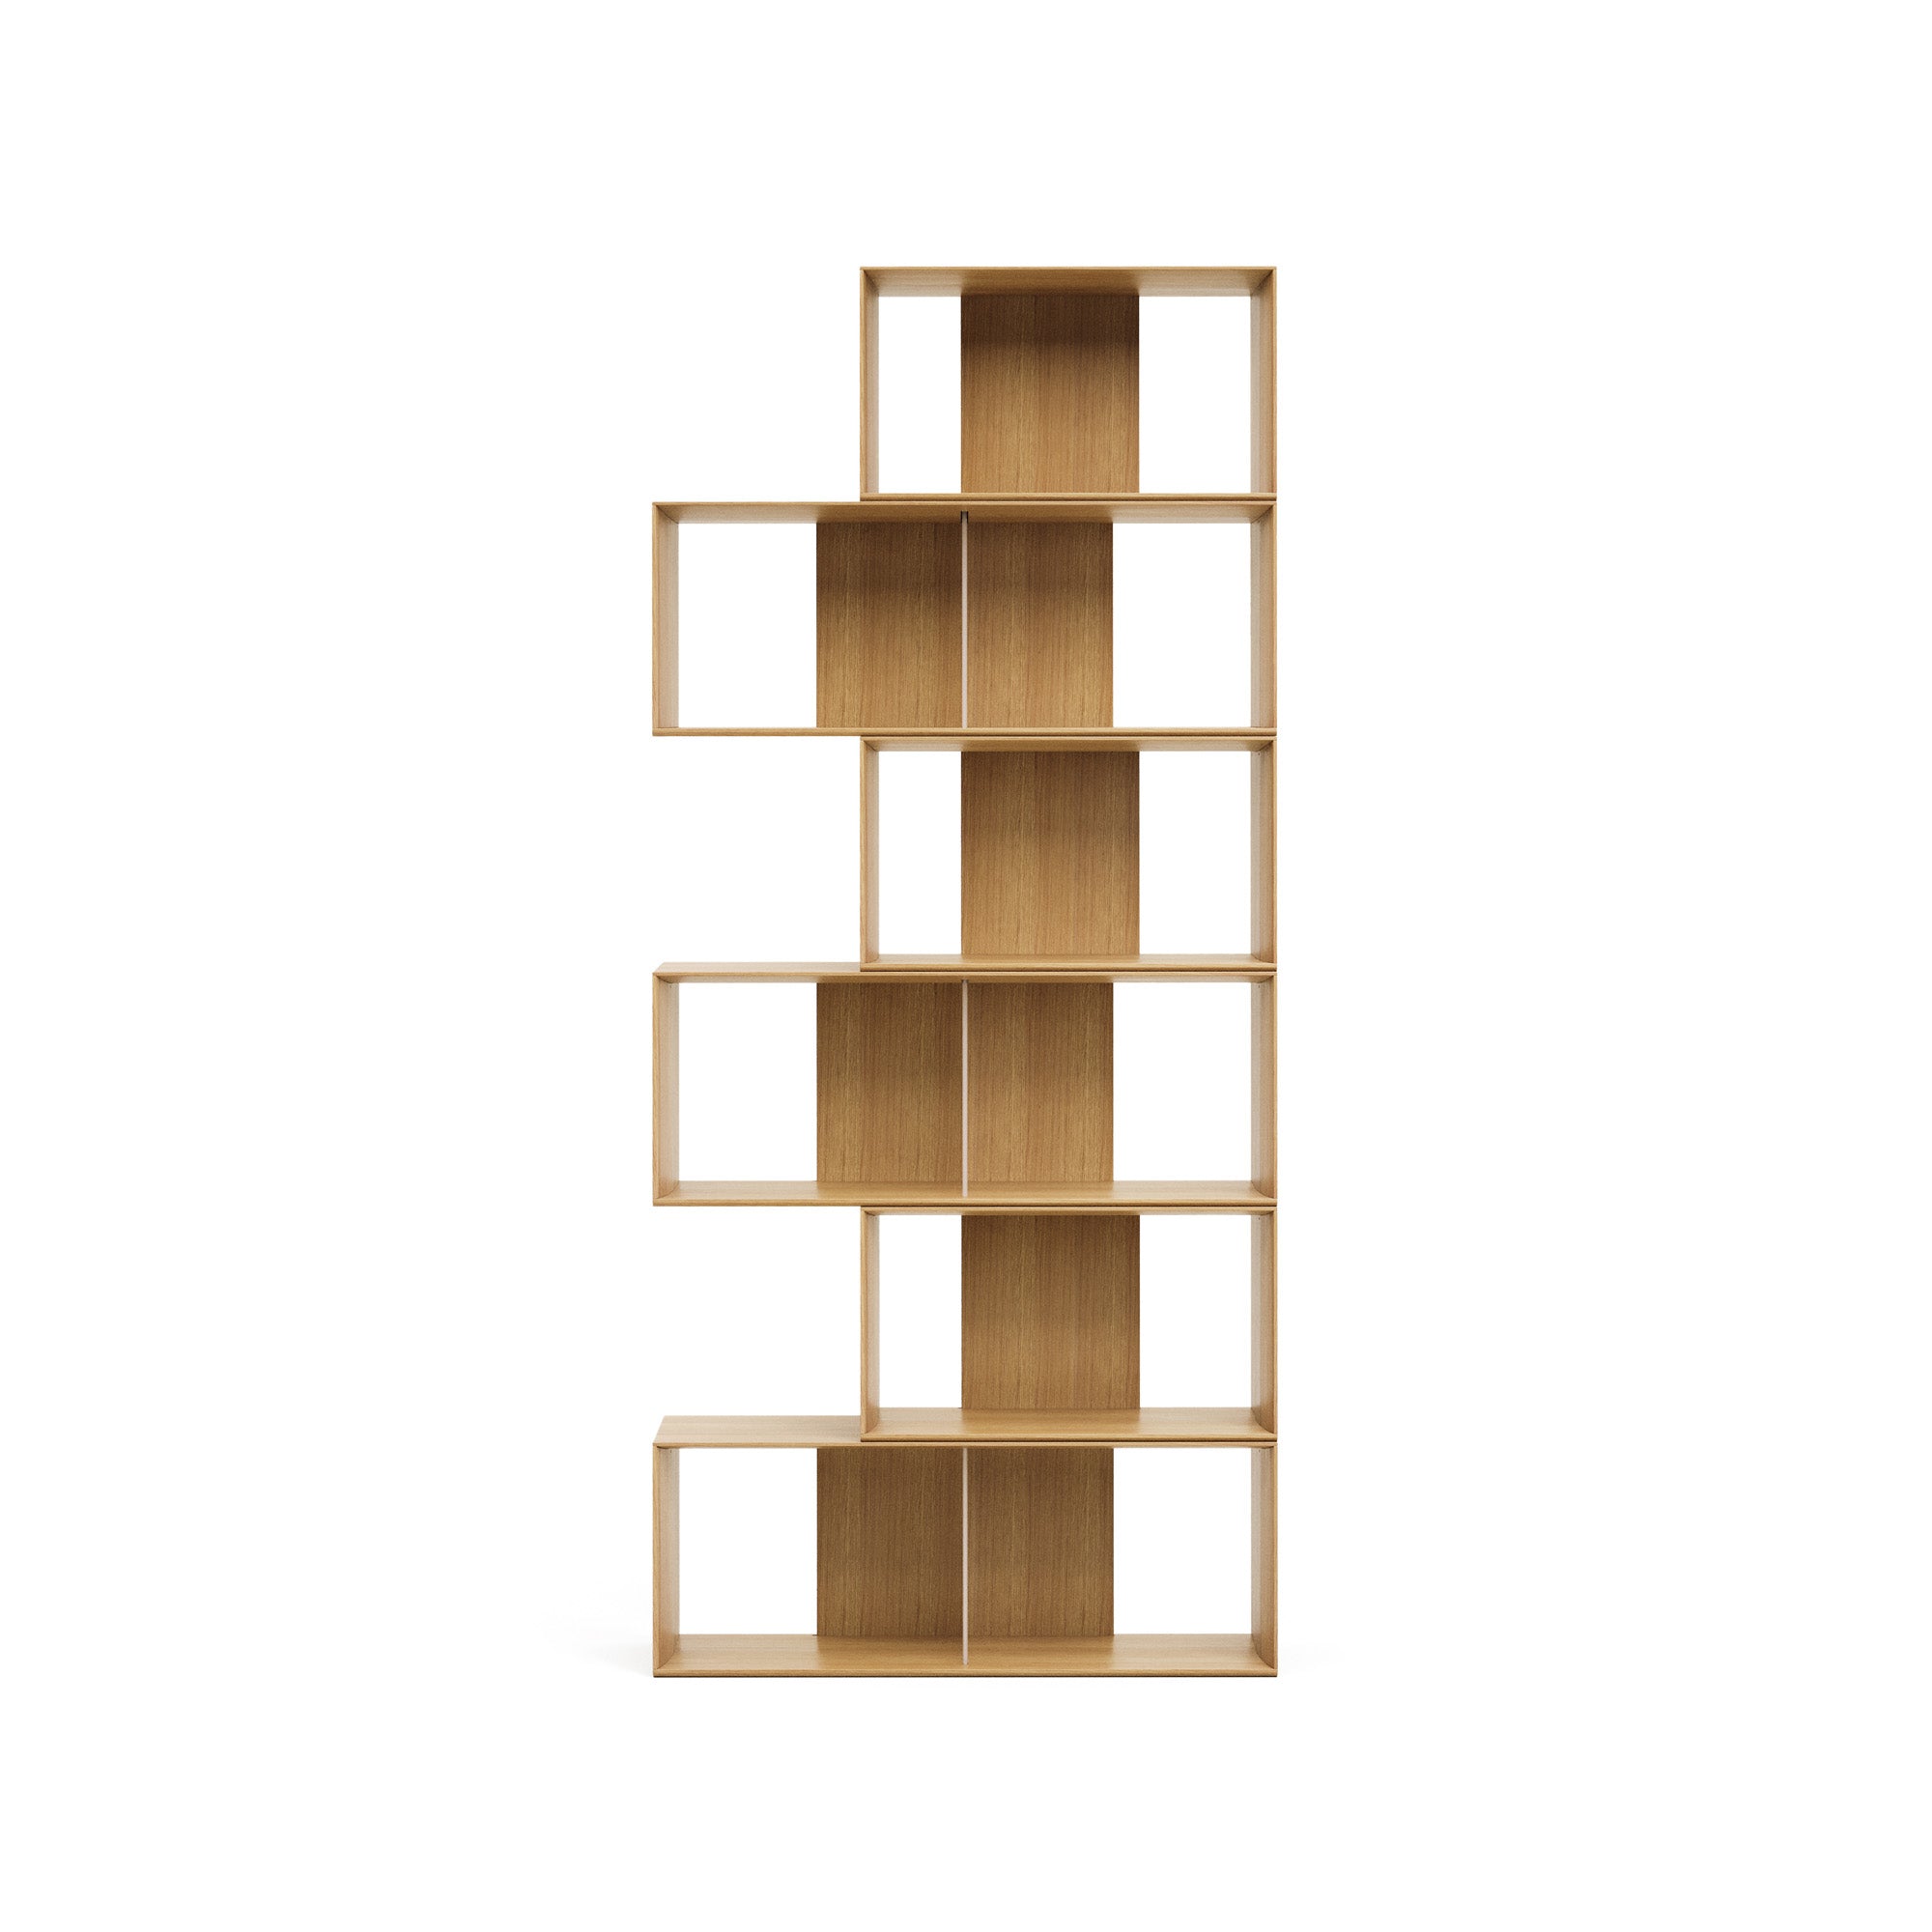 Litto set of 6 modular shelving units in oak wood veneer, 168 x 114 cm